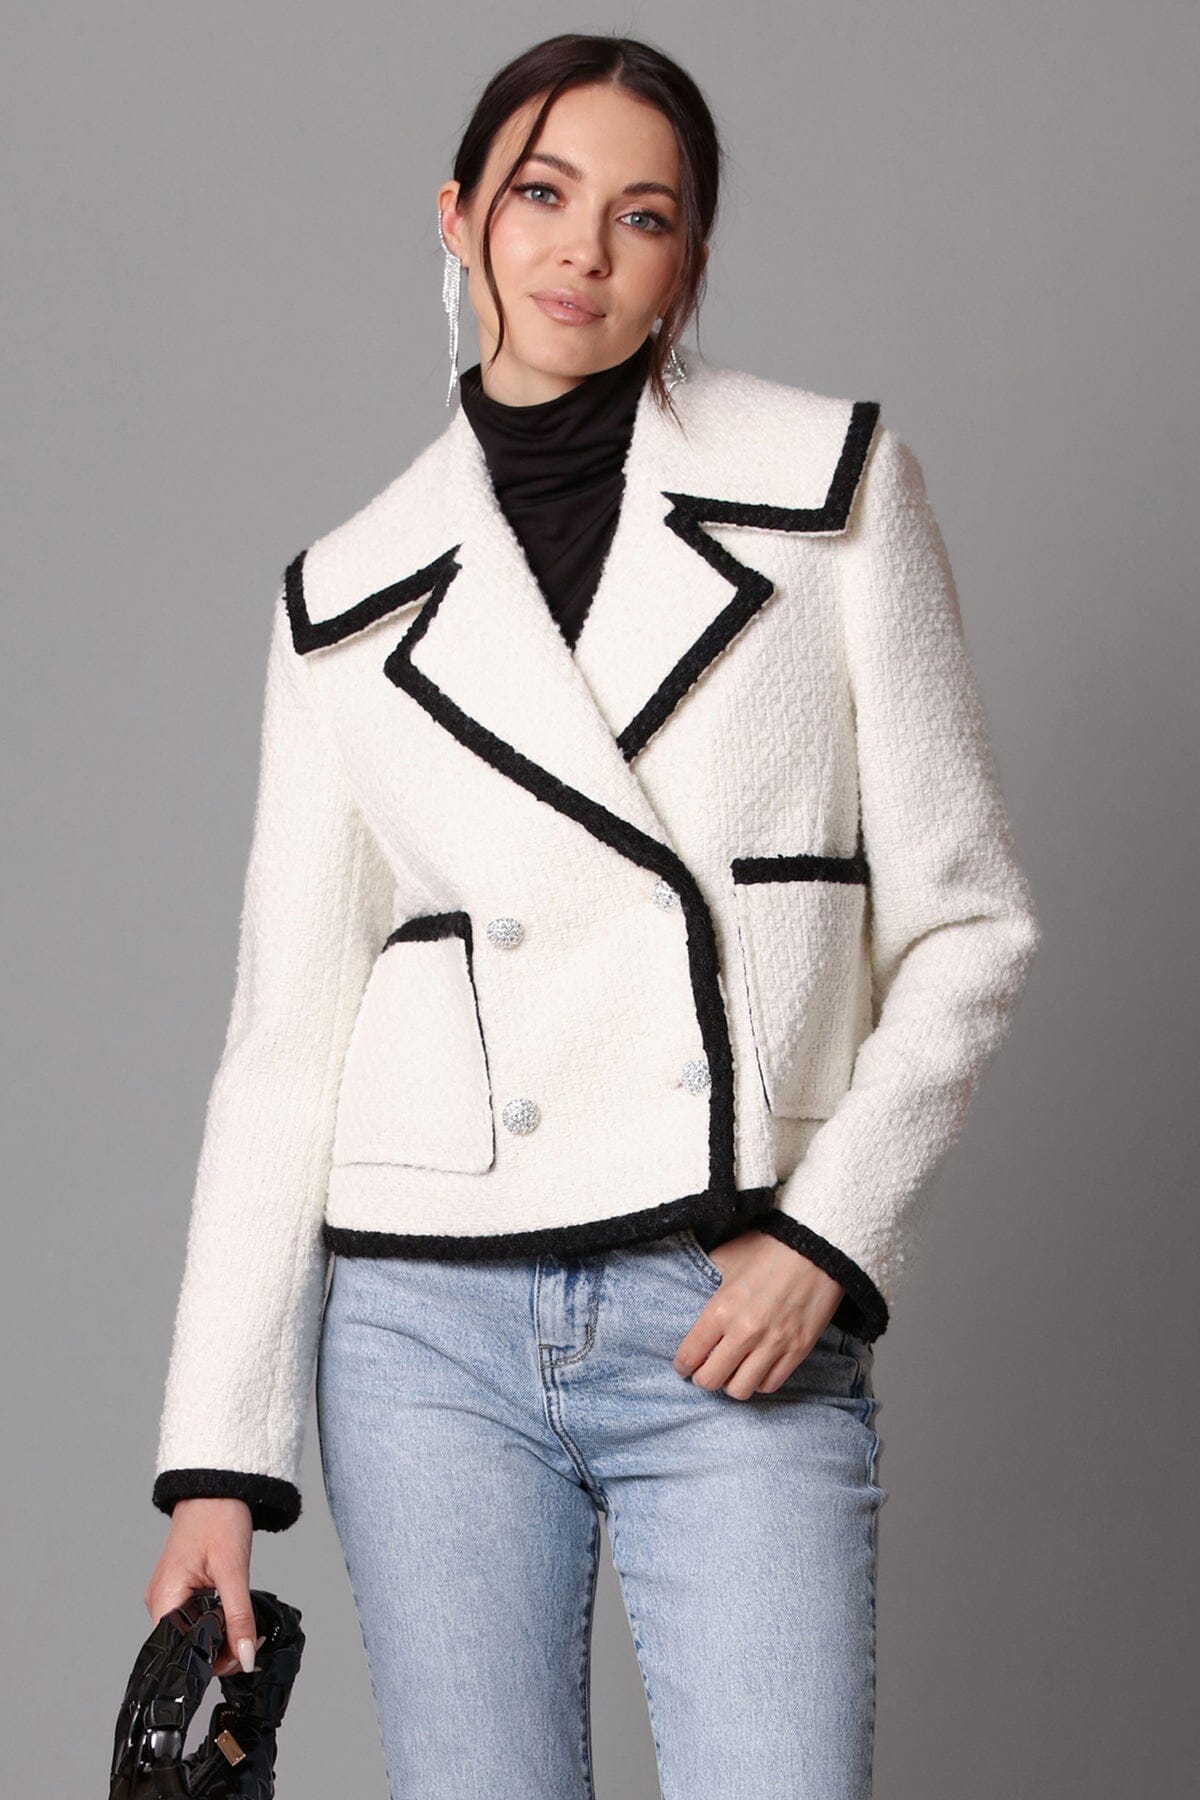 contrast trim wool blend tweed jacket white ivory black - figure flattering designer fashion office to date night jackets for women